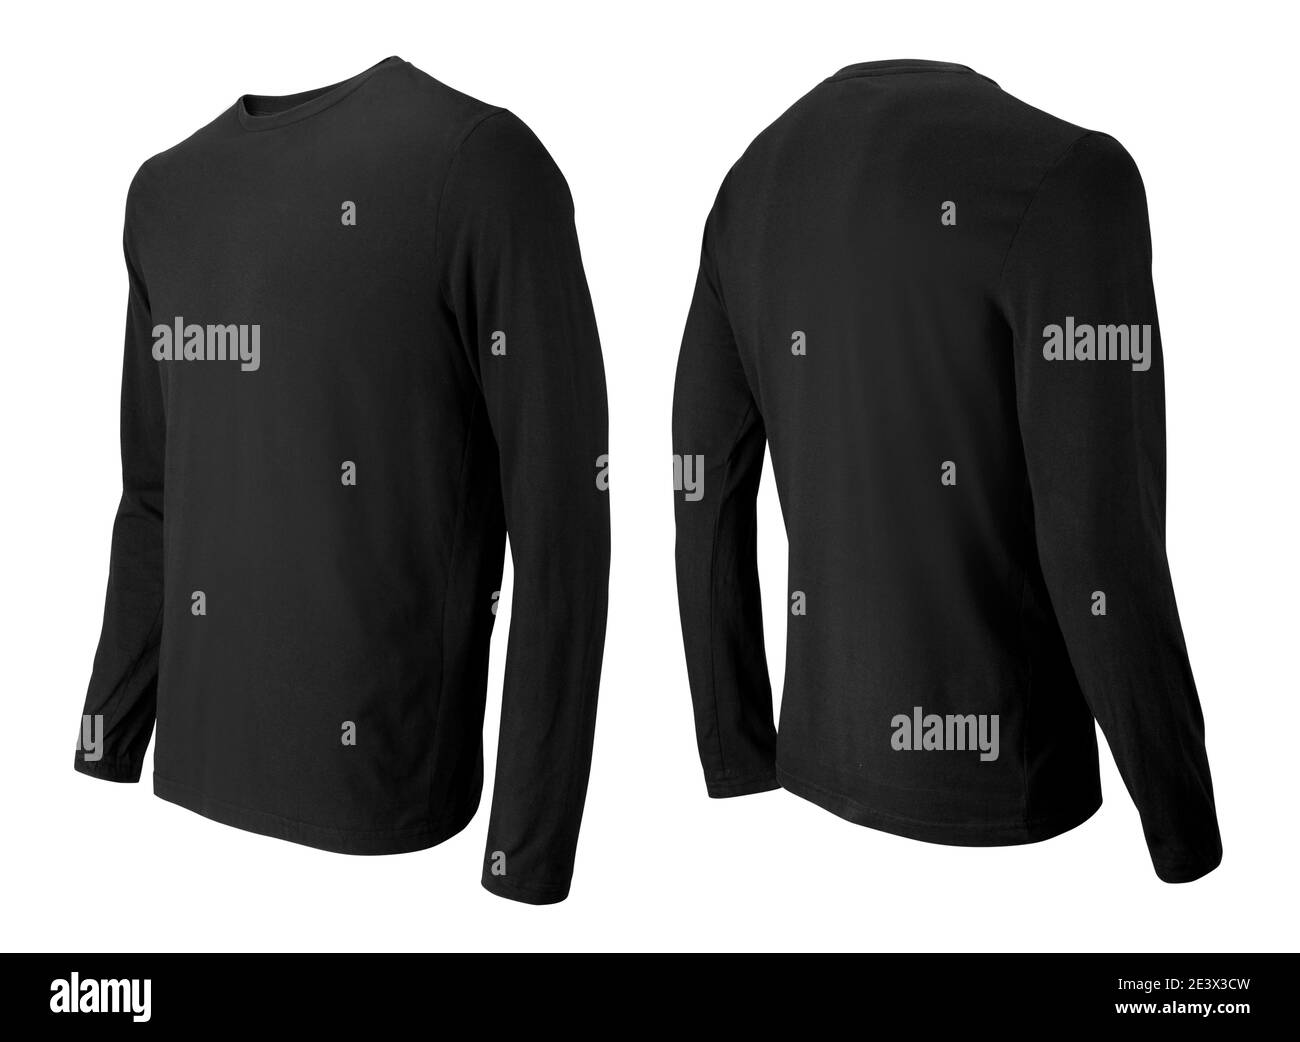 Black onBlack  PLA logo on front of Long Sleeve Shirt